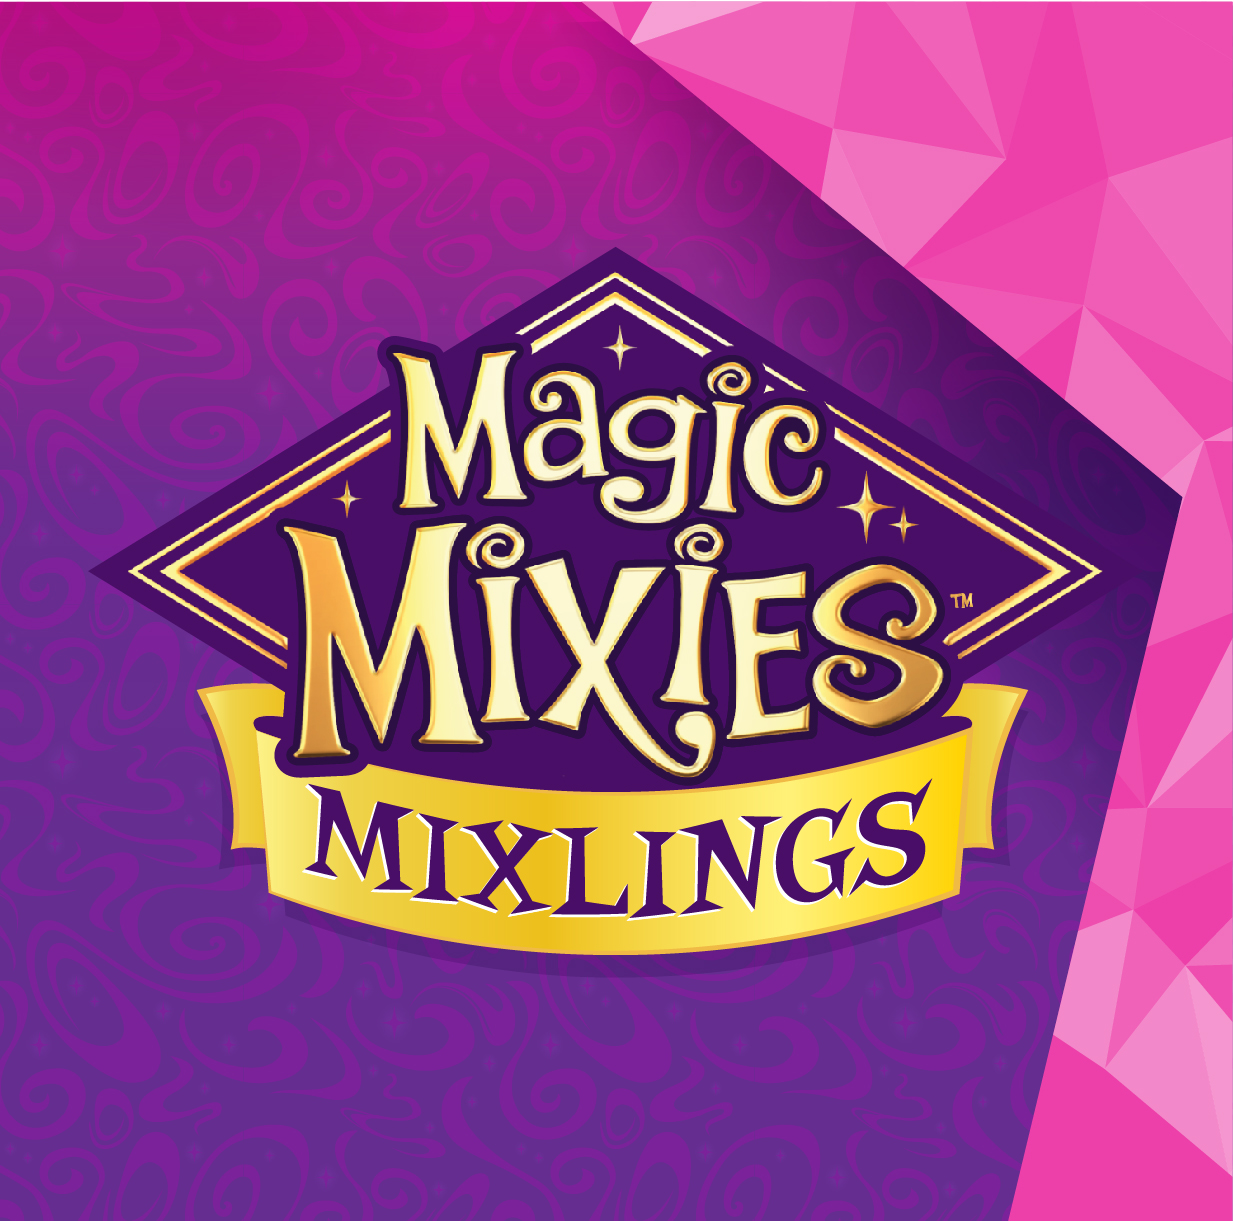 Magic Mixies_Mixlings_592x586px_Logo